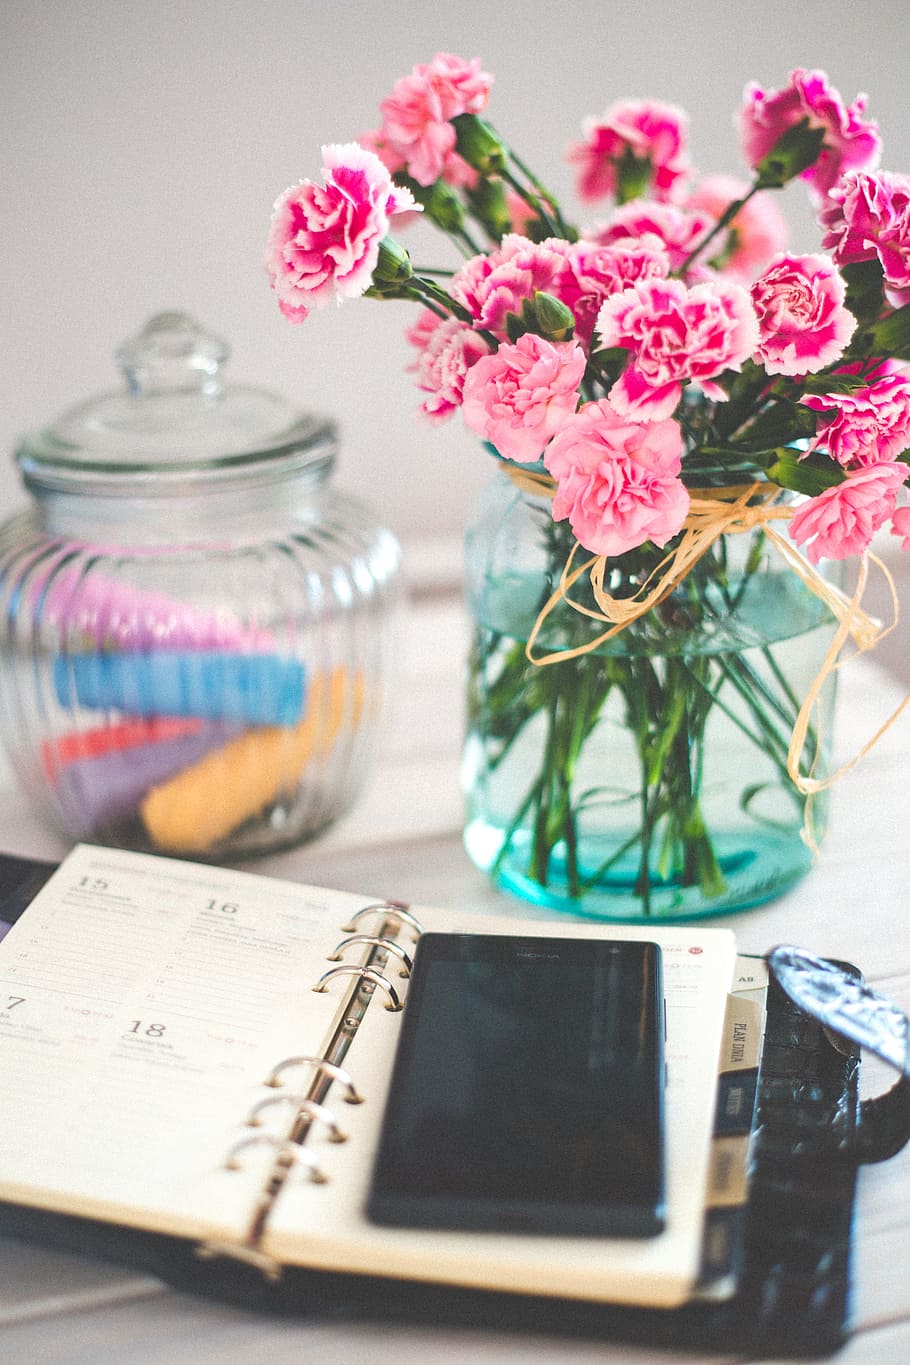 pink, carnation flowers, vase, smartphone, mobile, notepad, agenda, calendar, flowers, glass